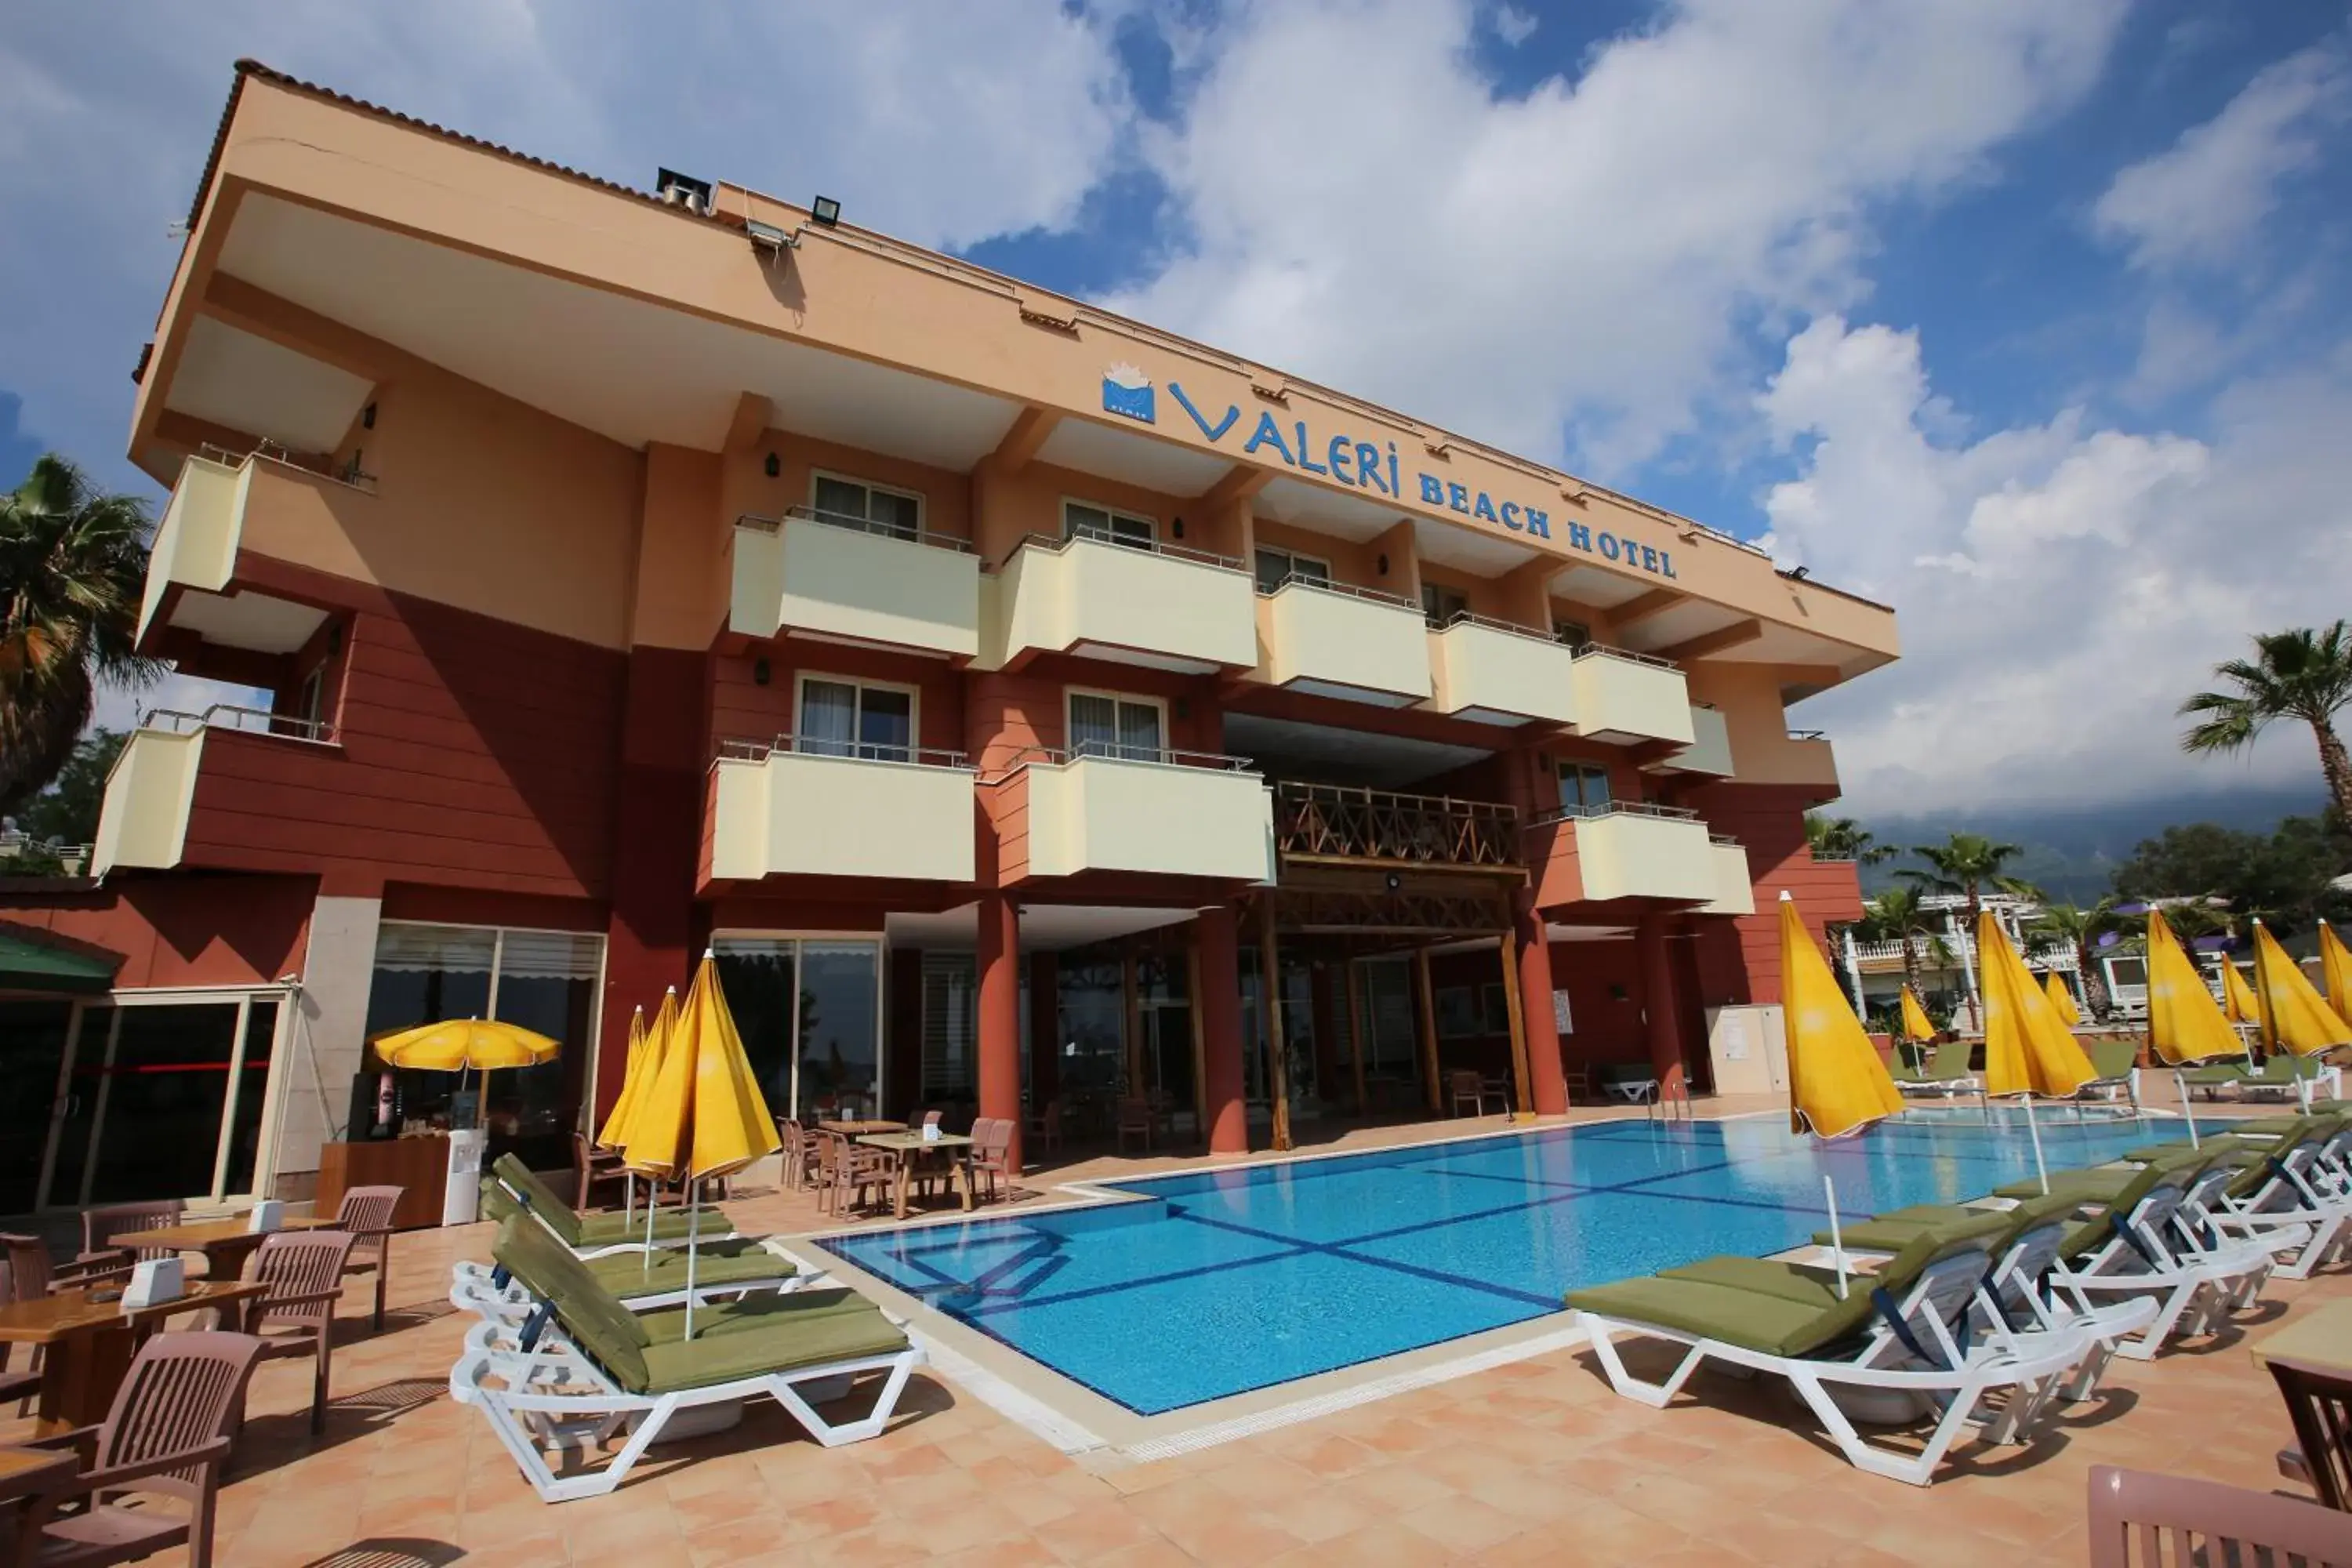 Swimming pool, Property Building in Valeri Beach Hotel